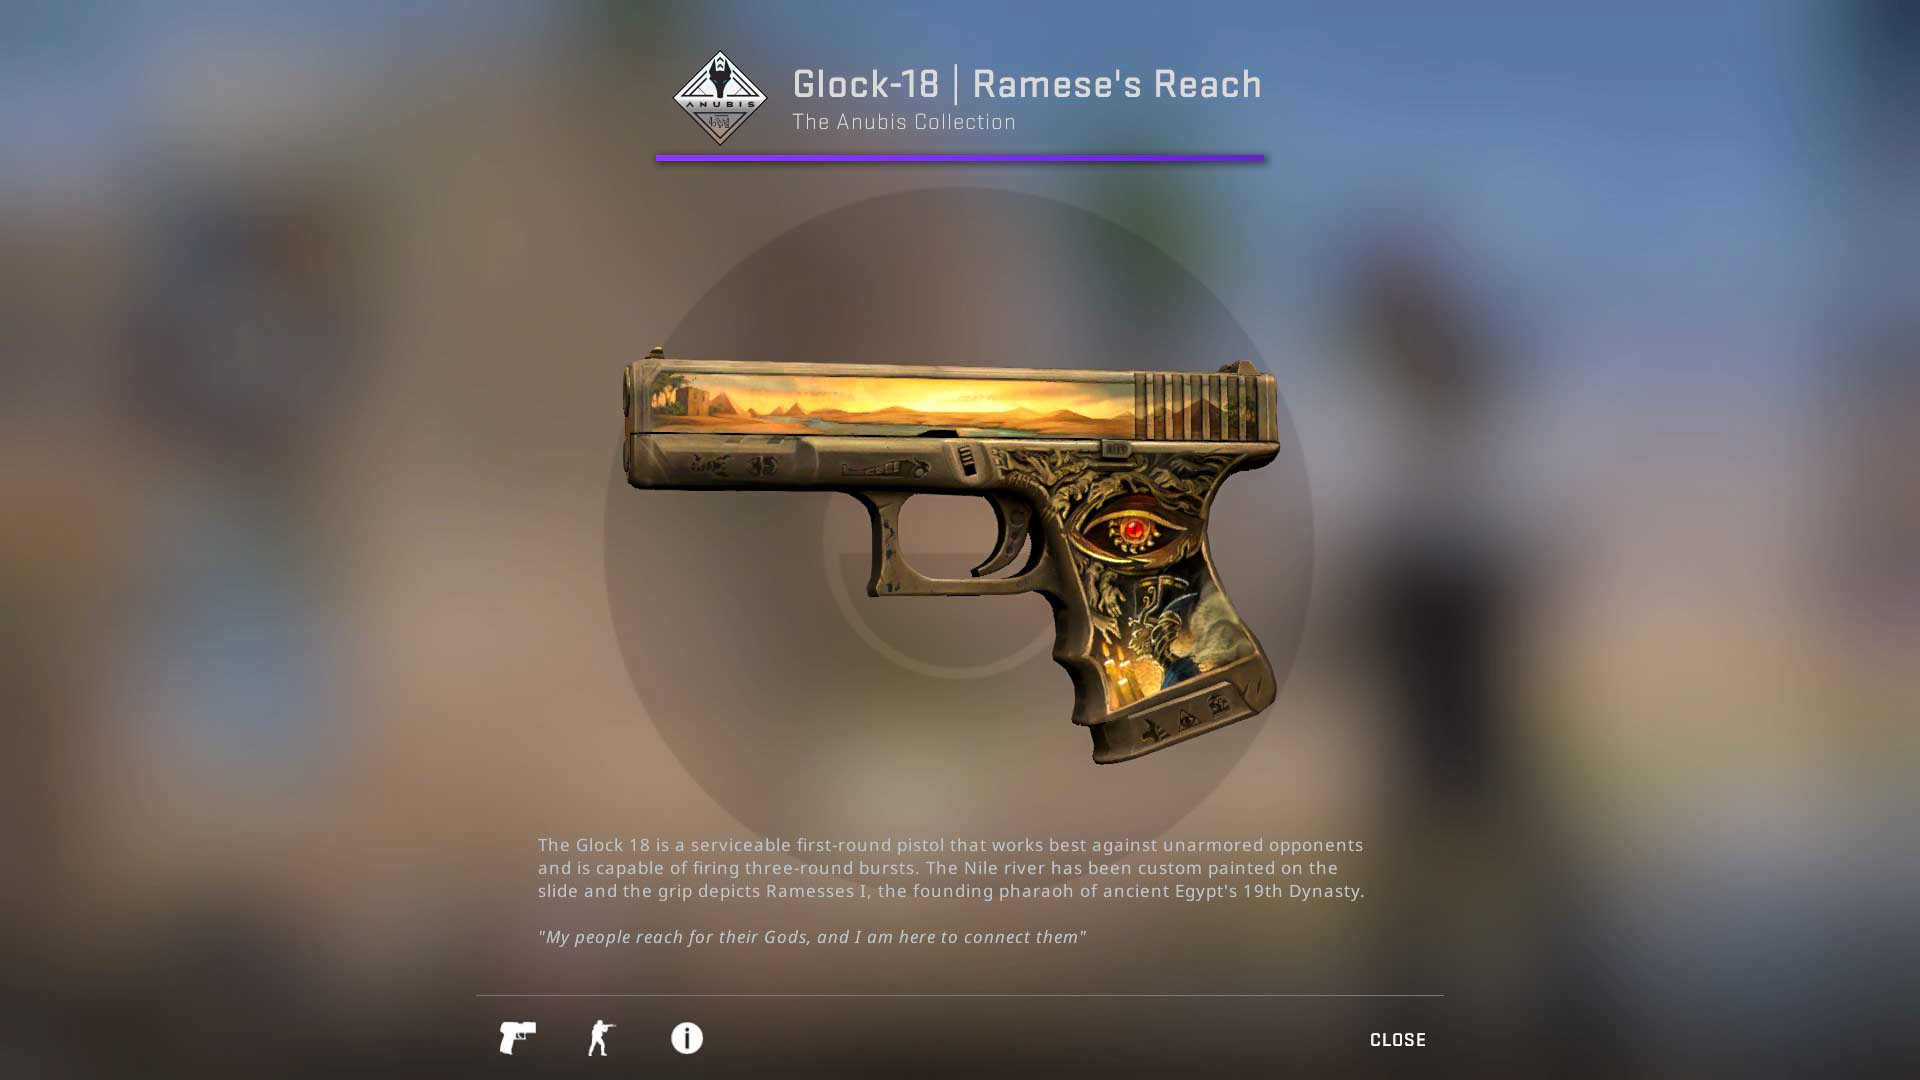 Glock-18 Ramese's Reach csgo skin